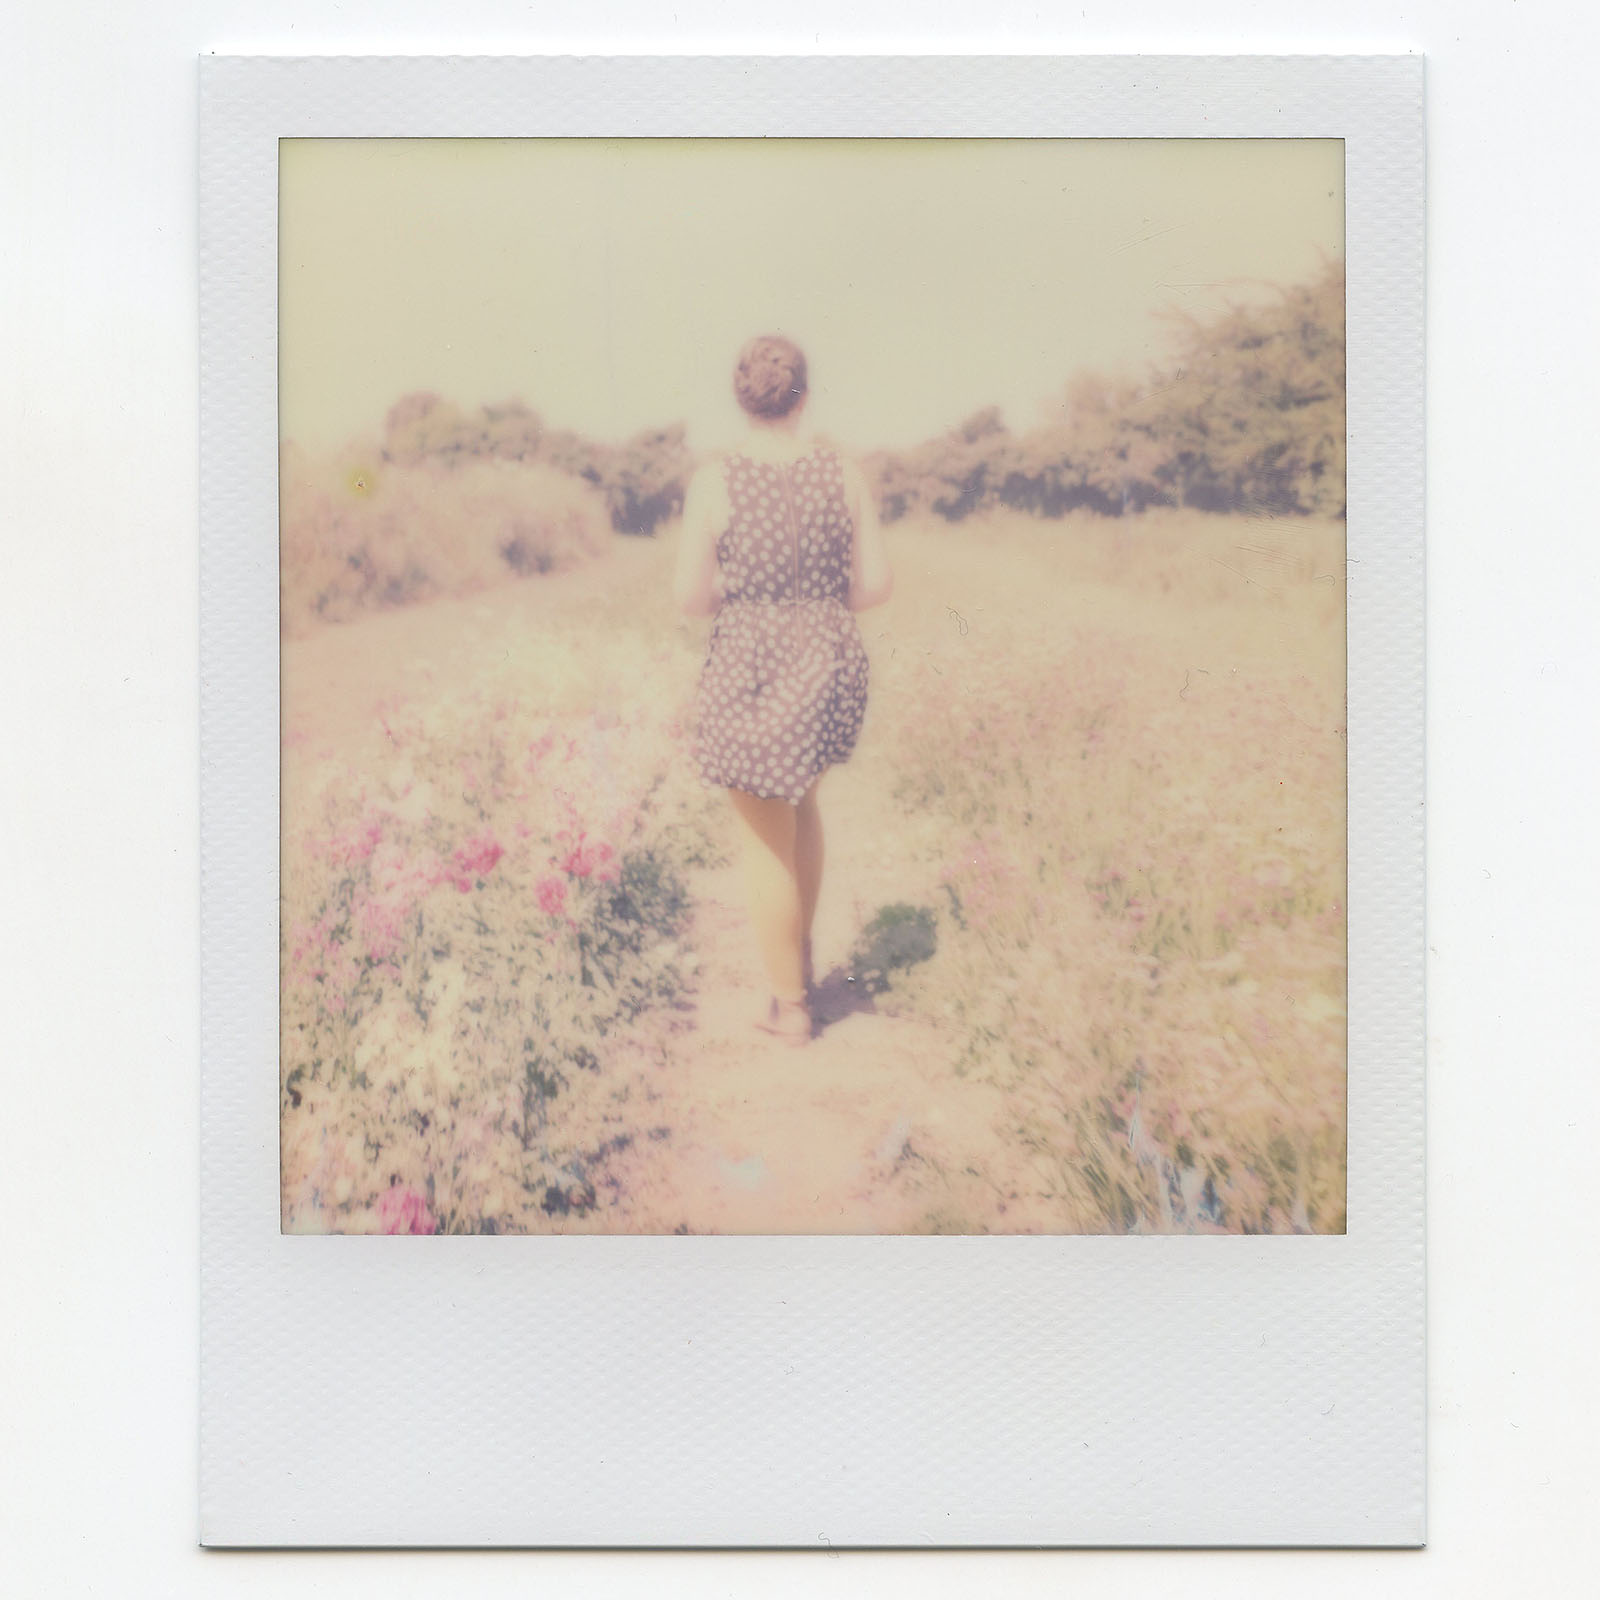 Polaroid of woman walking in a farm in Humboldt County, CA